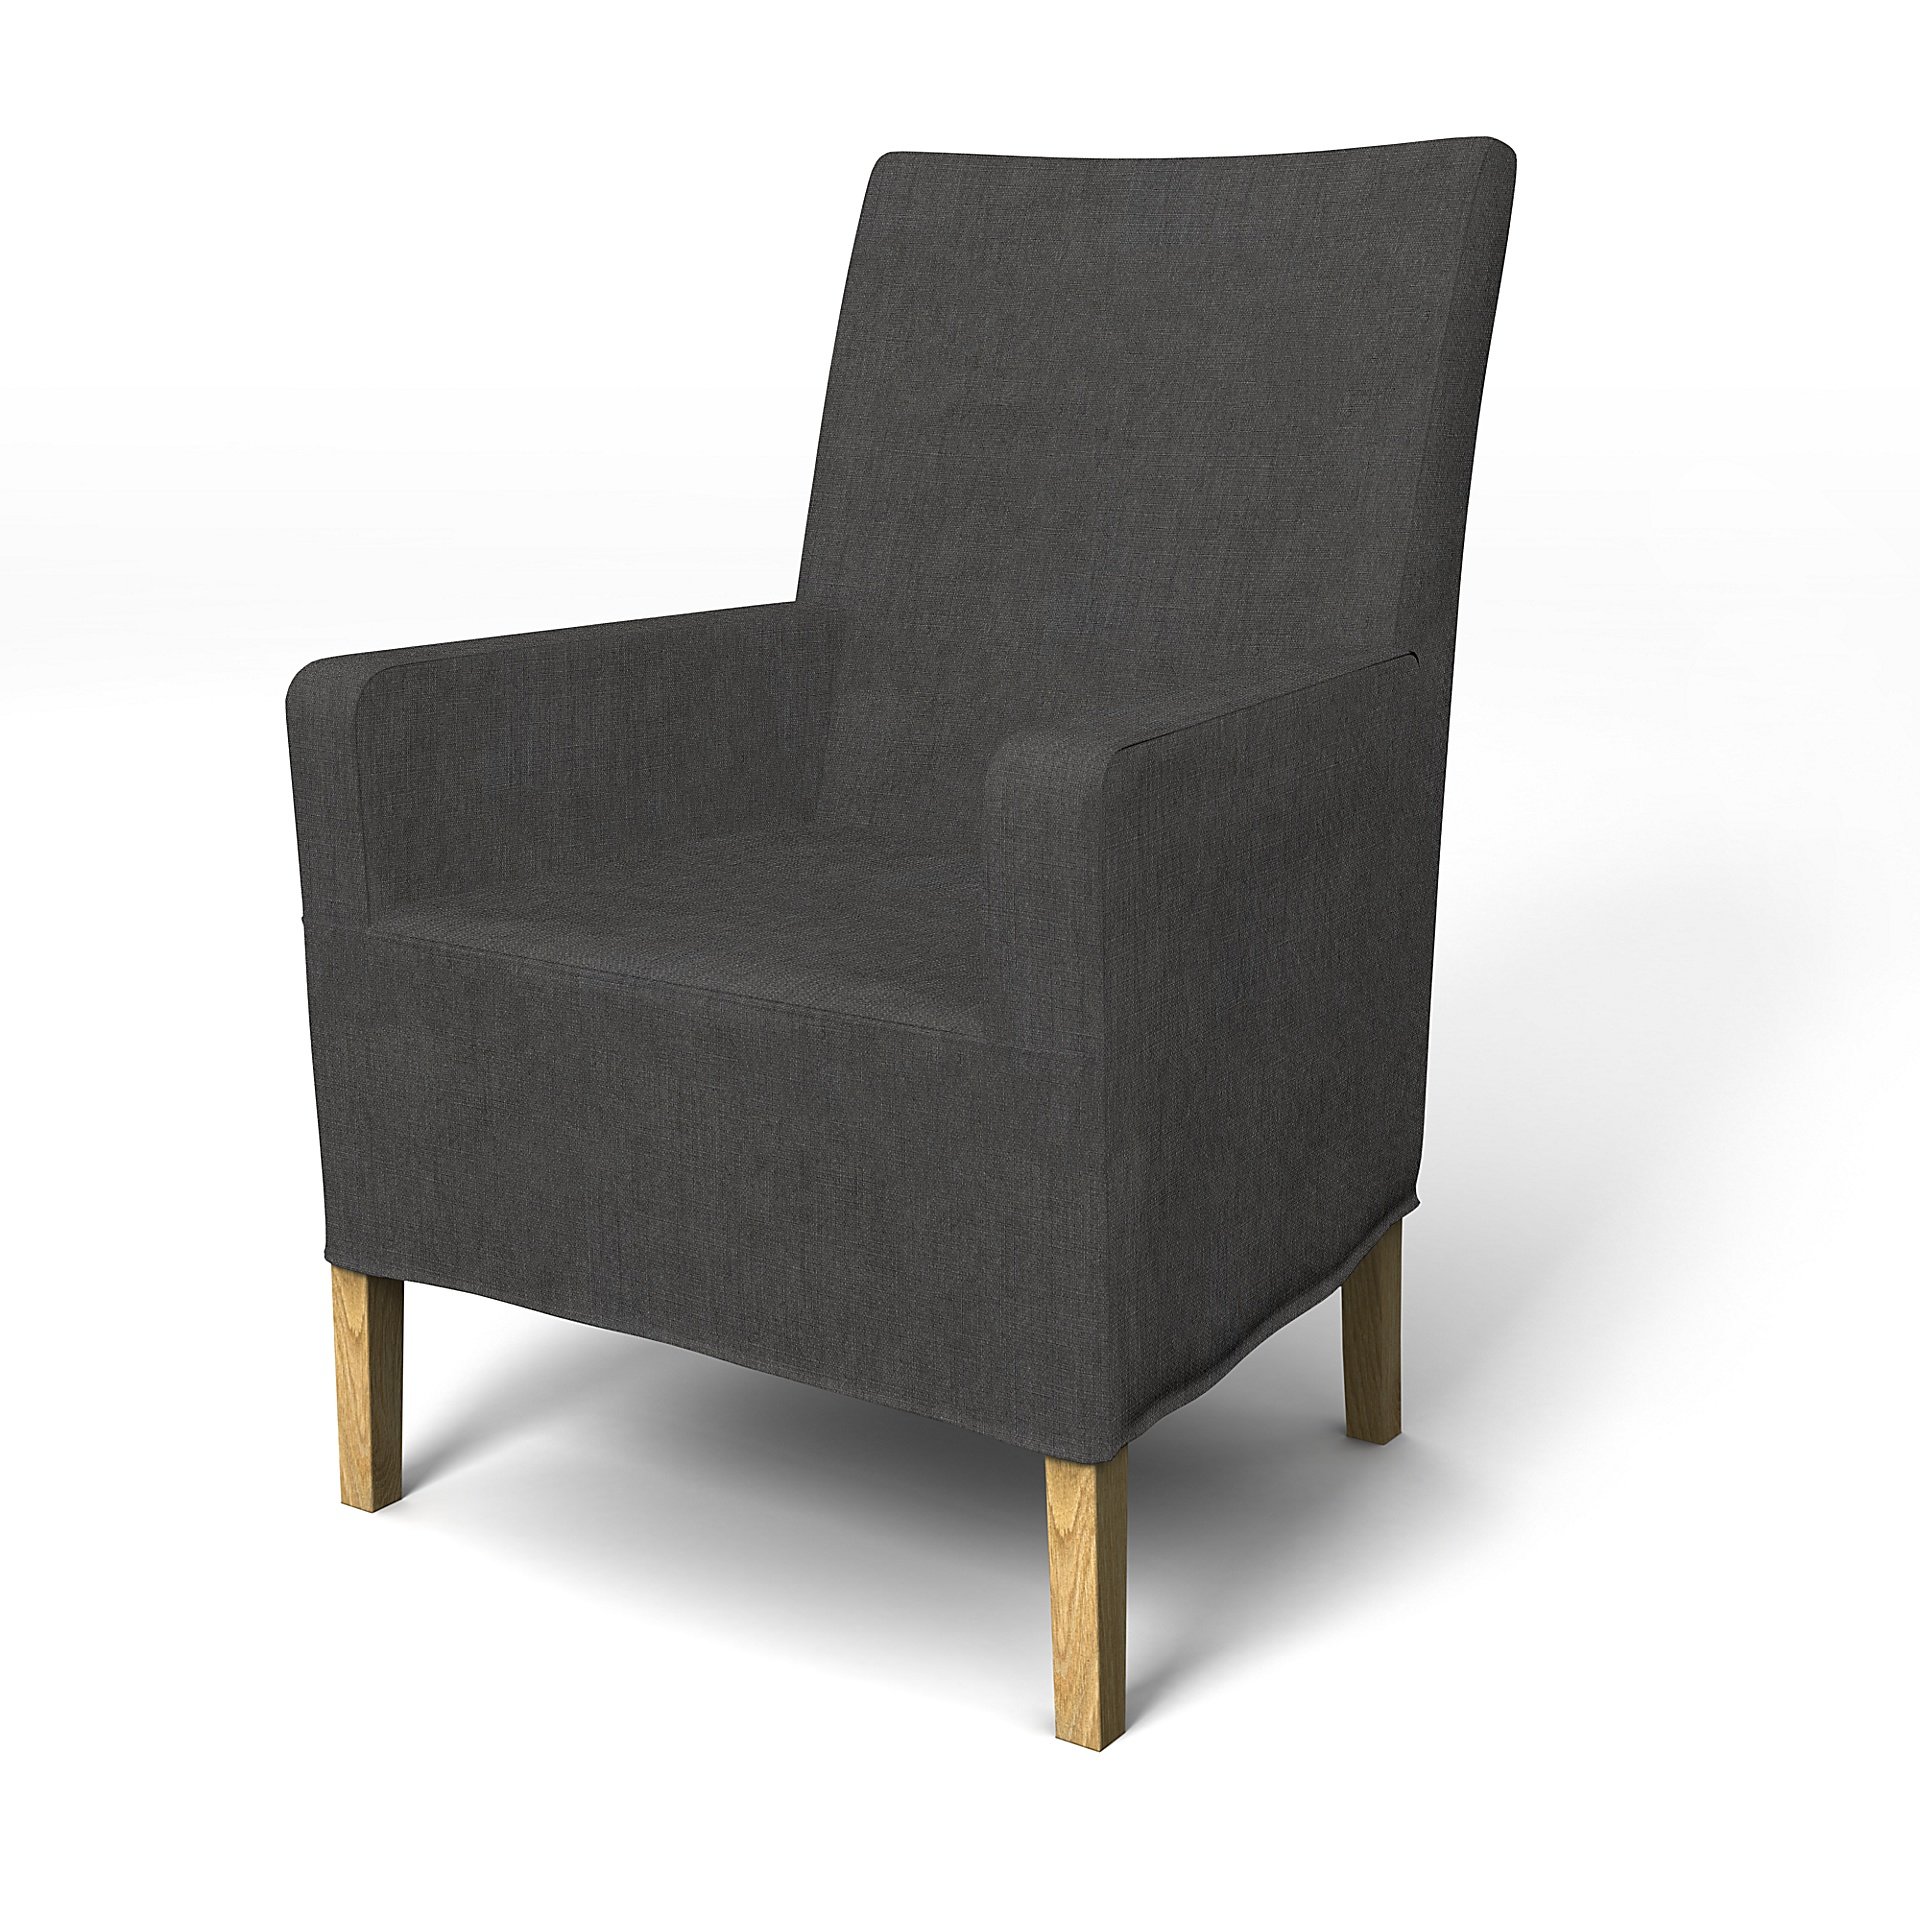 IKEA - Henriksdal, Chair cover w/ armrest, medium length skirt, Espresso, Linen - Bemz